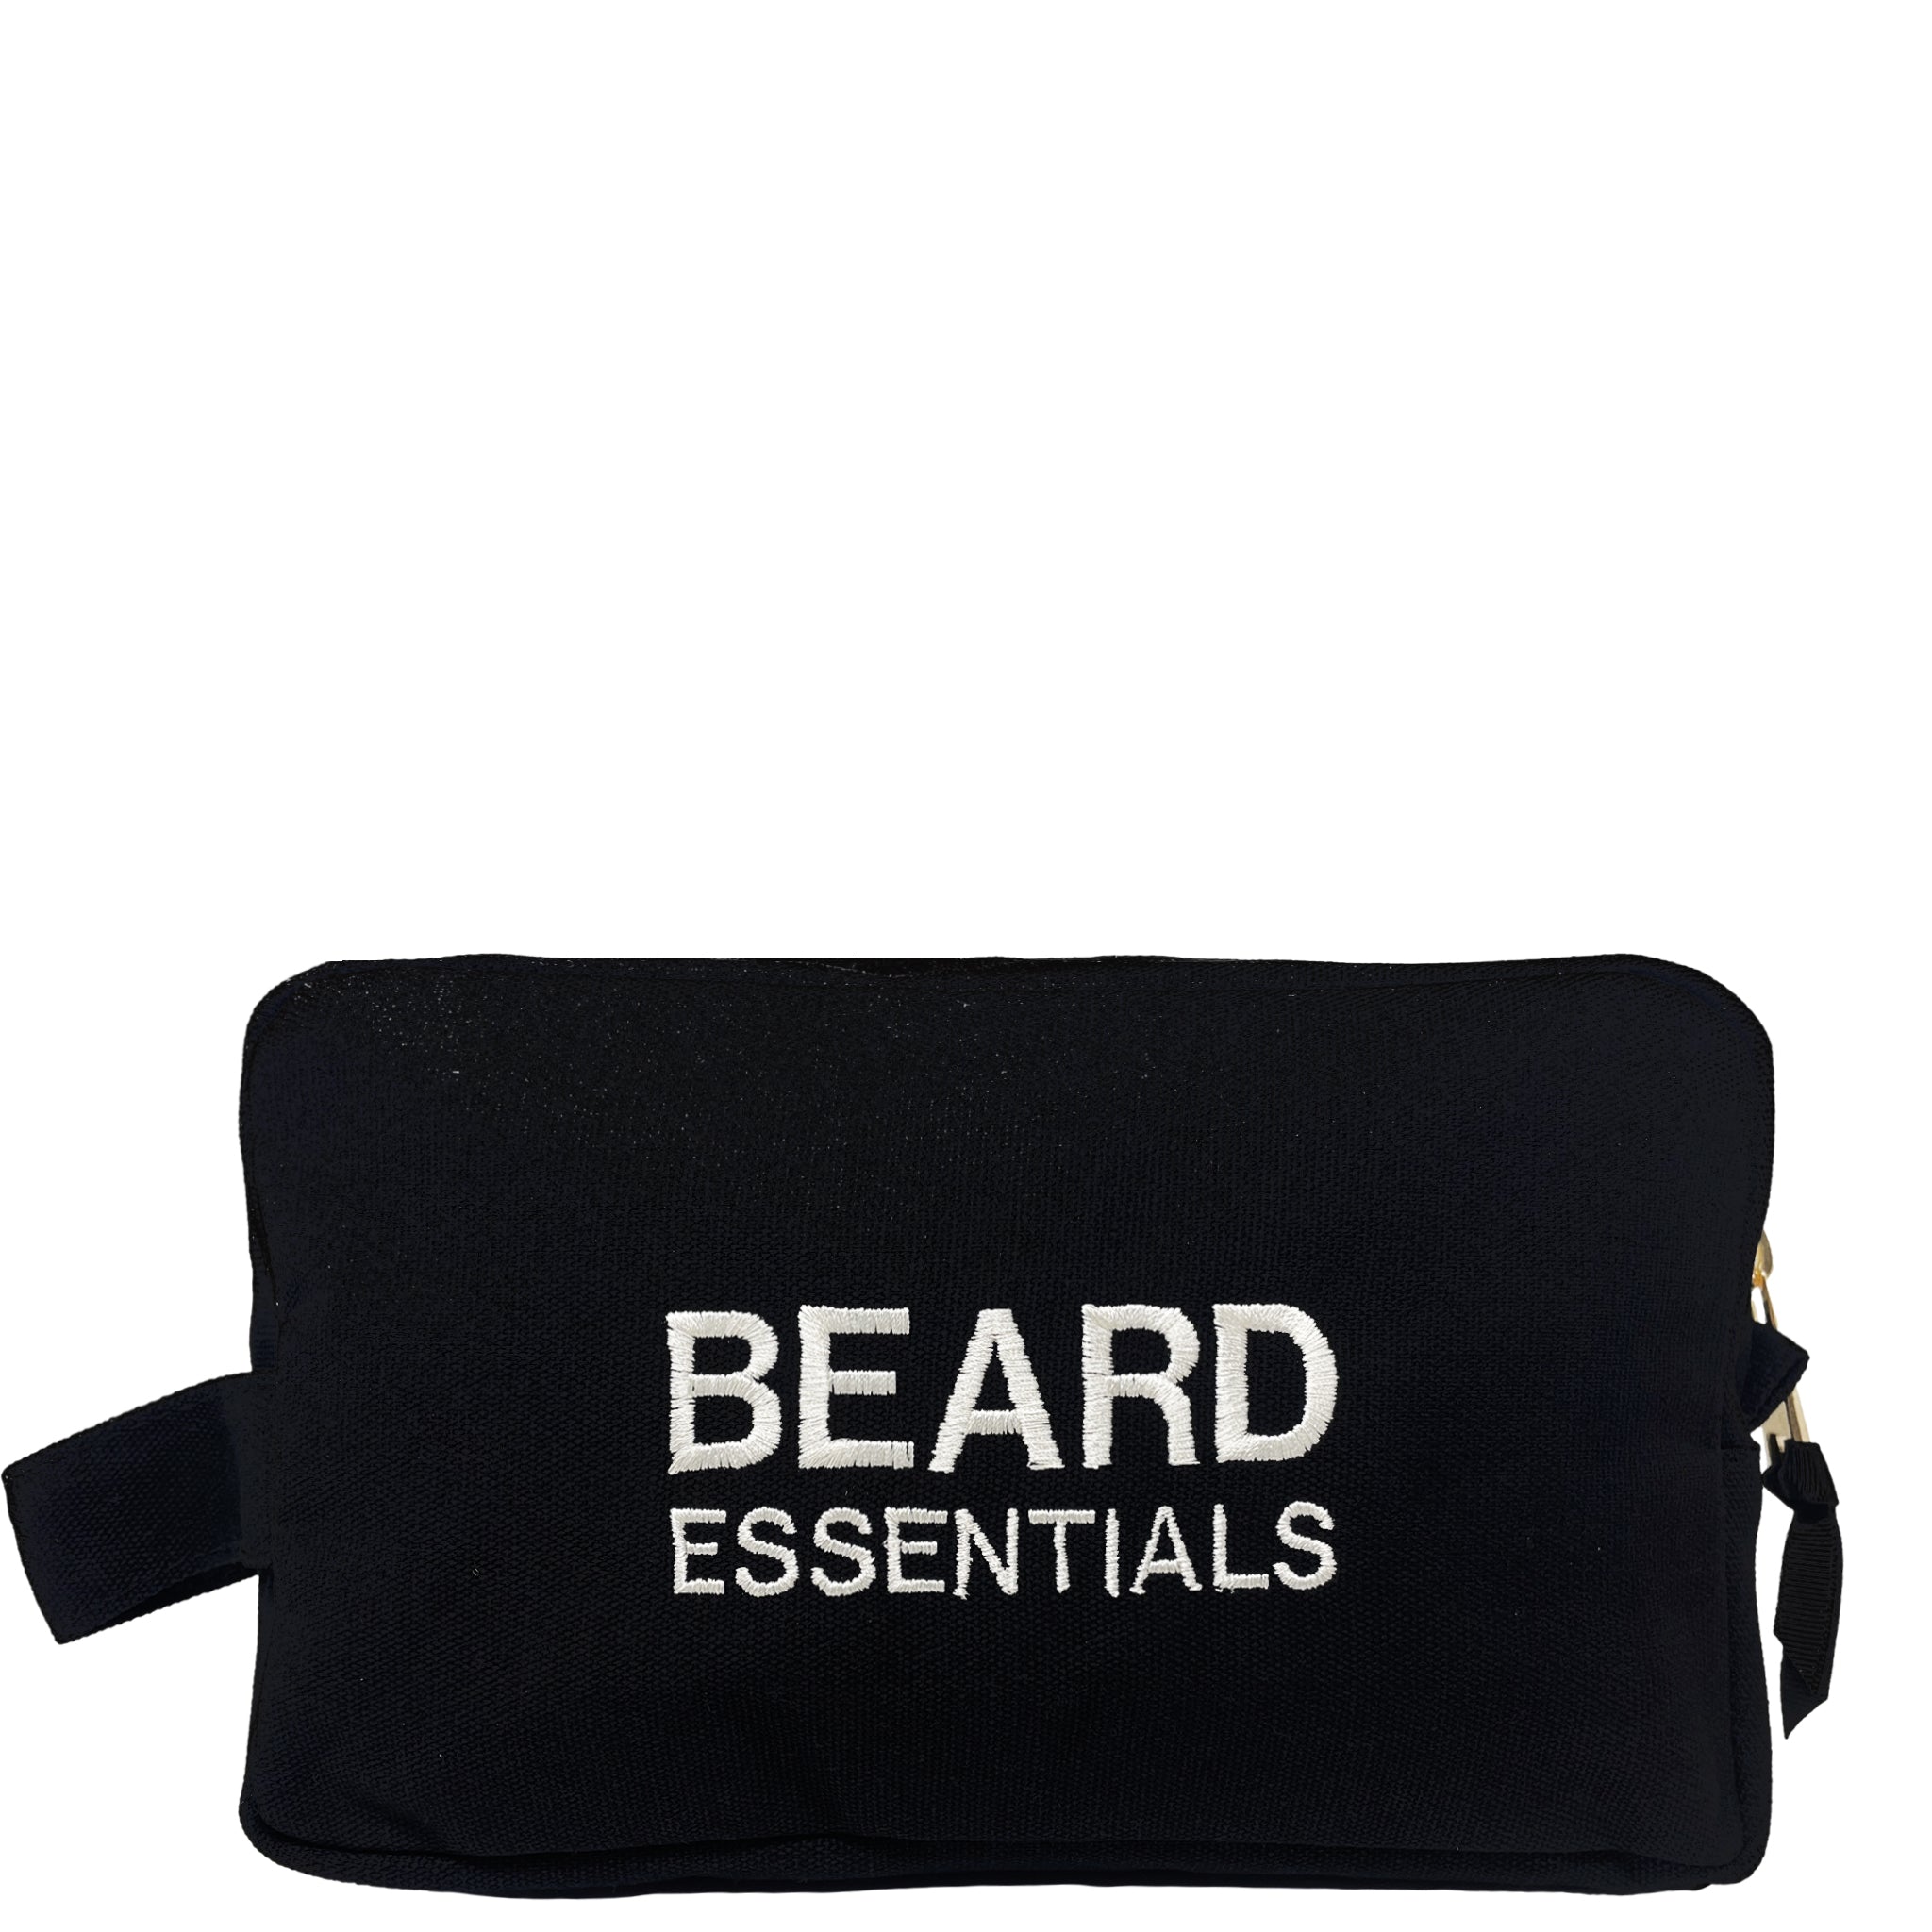 Beard Essentials Pouch, Black | Bag-all